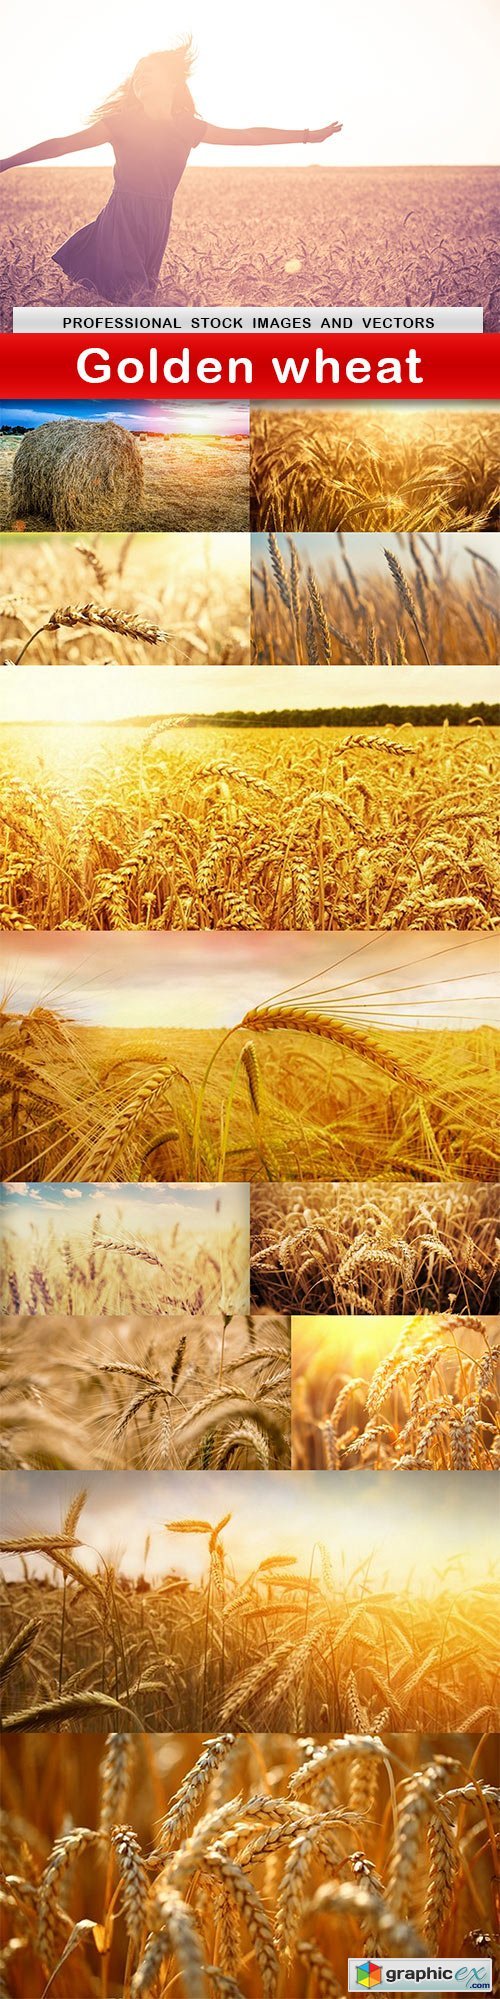 Golden wheat - 13 UHQ JPEG